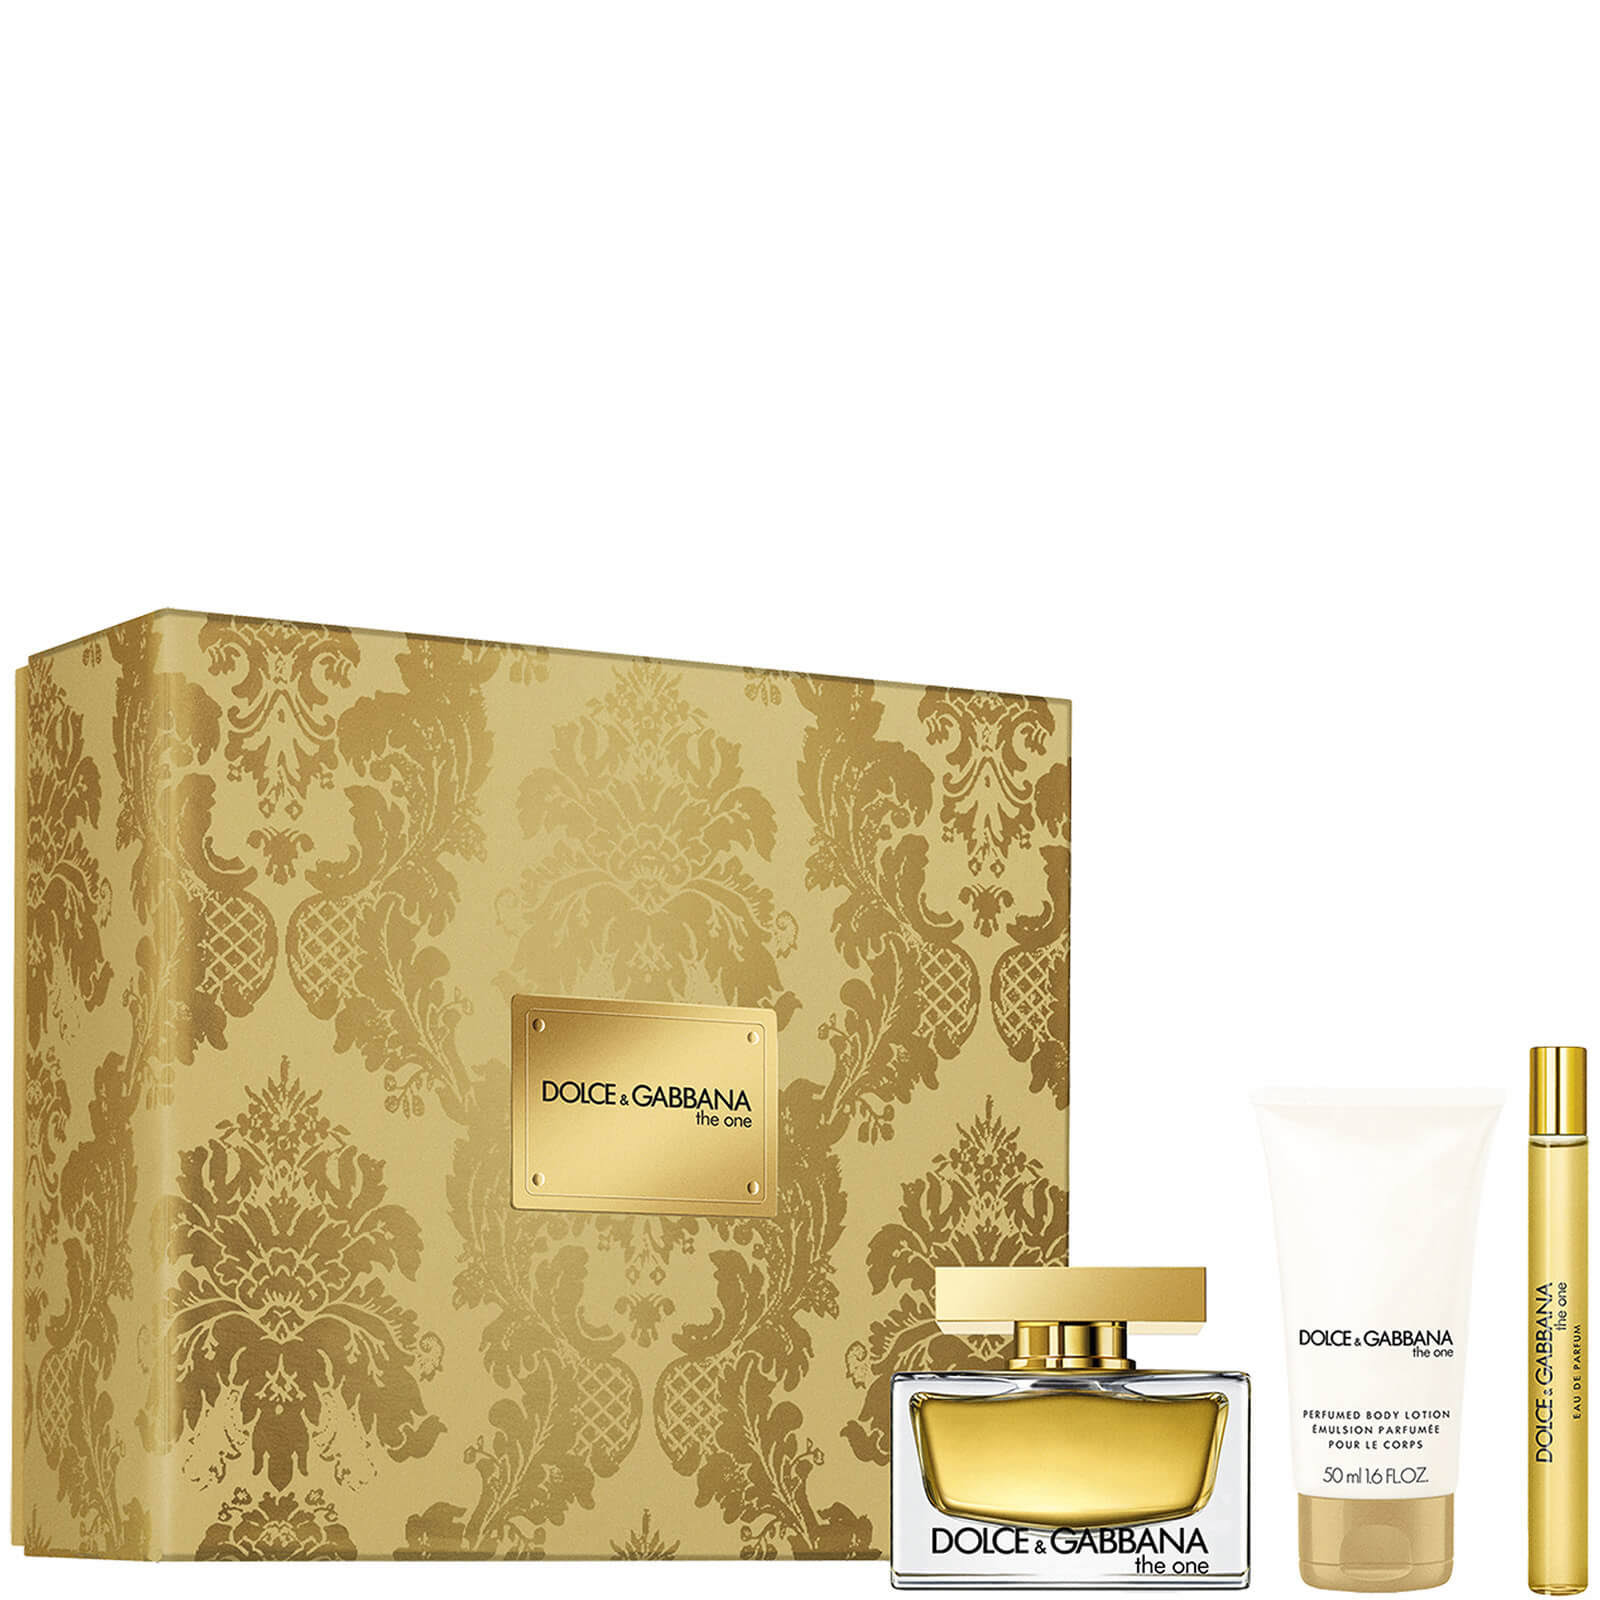 Dolce&Gabbana The One Eau De Parfum Set - 75ml (Worth £114.00)